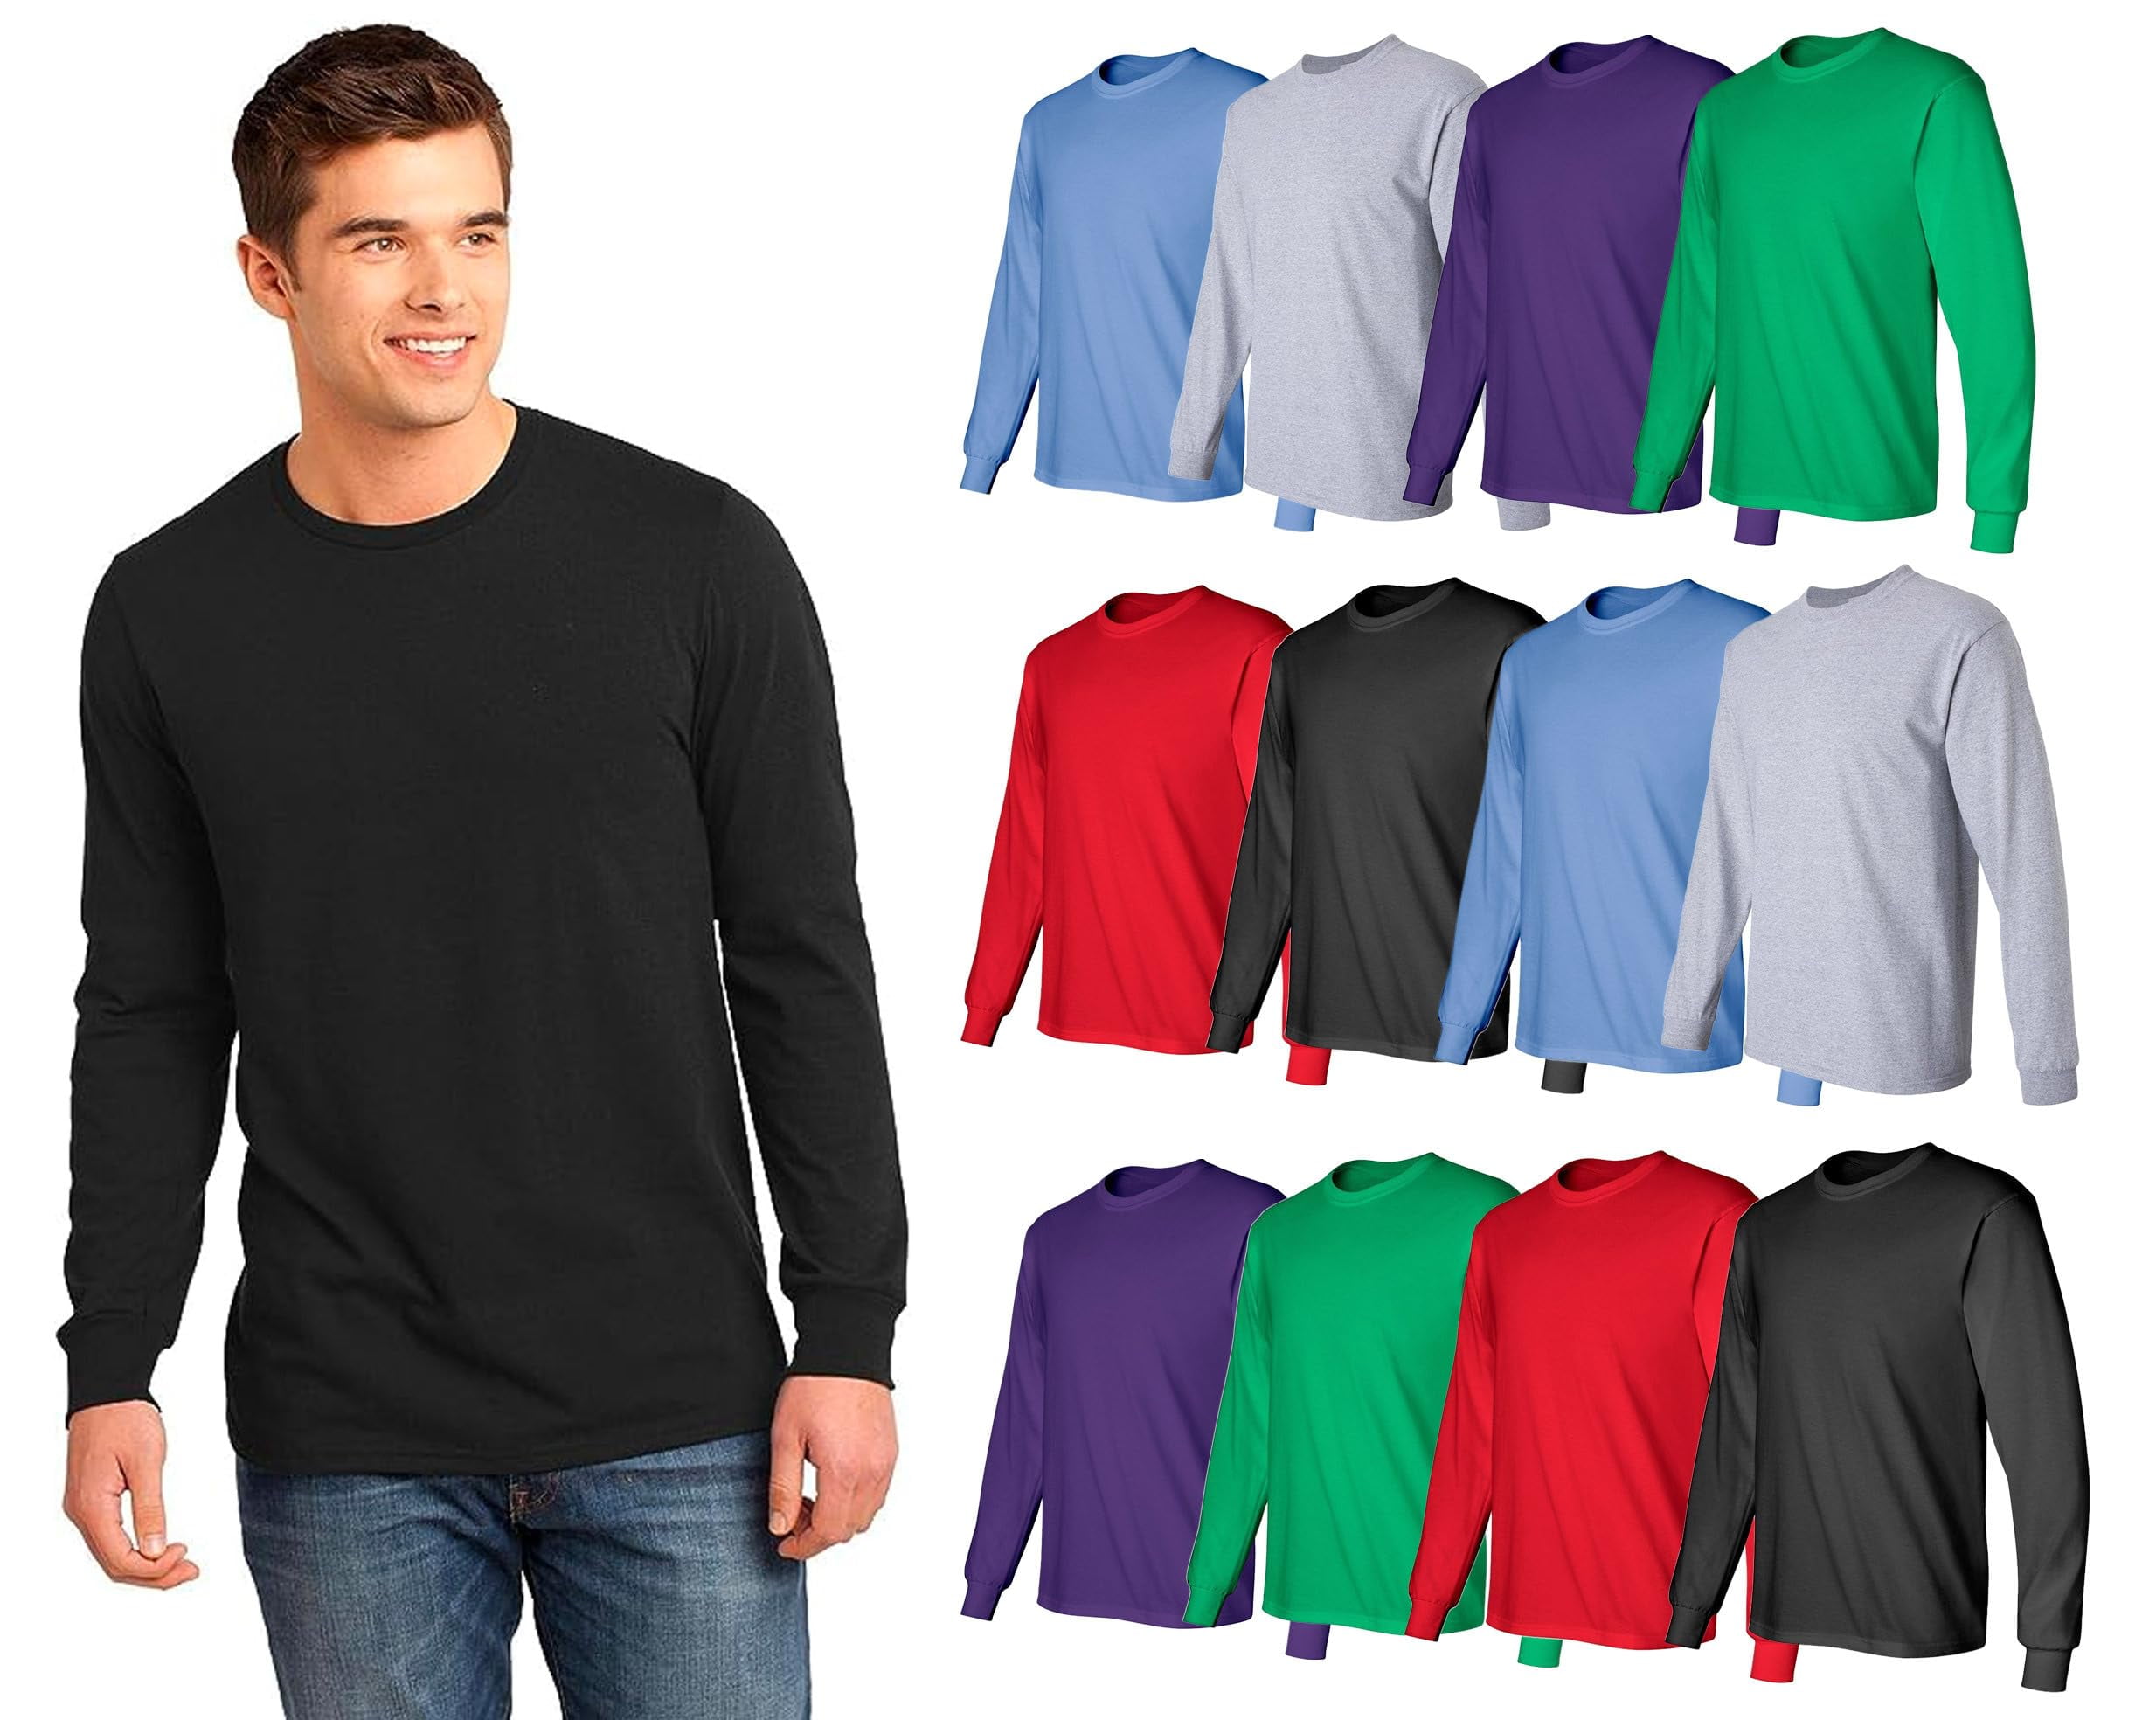 BILLIONHATS Mens Long Sleeve Colorful T-Shirts, 100% Cotton - Crew Neck  Bulk Tees for Men, Wholesale Sleeved Tshirt Packs (12 Pack Long Sleeve